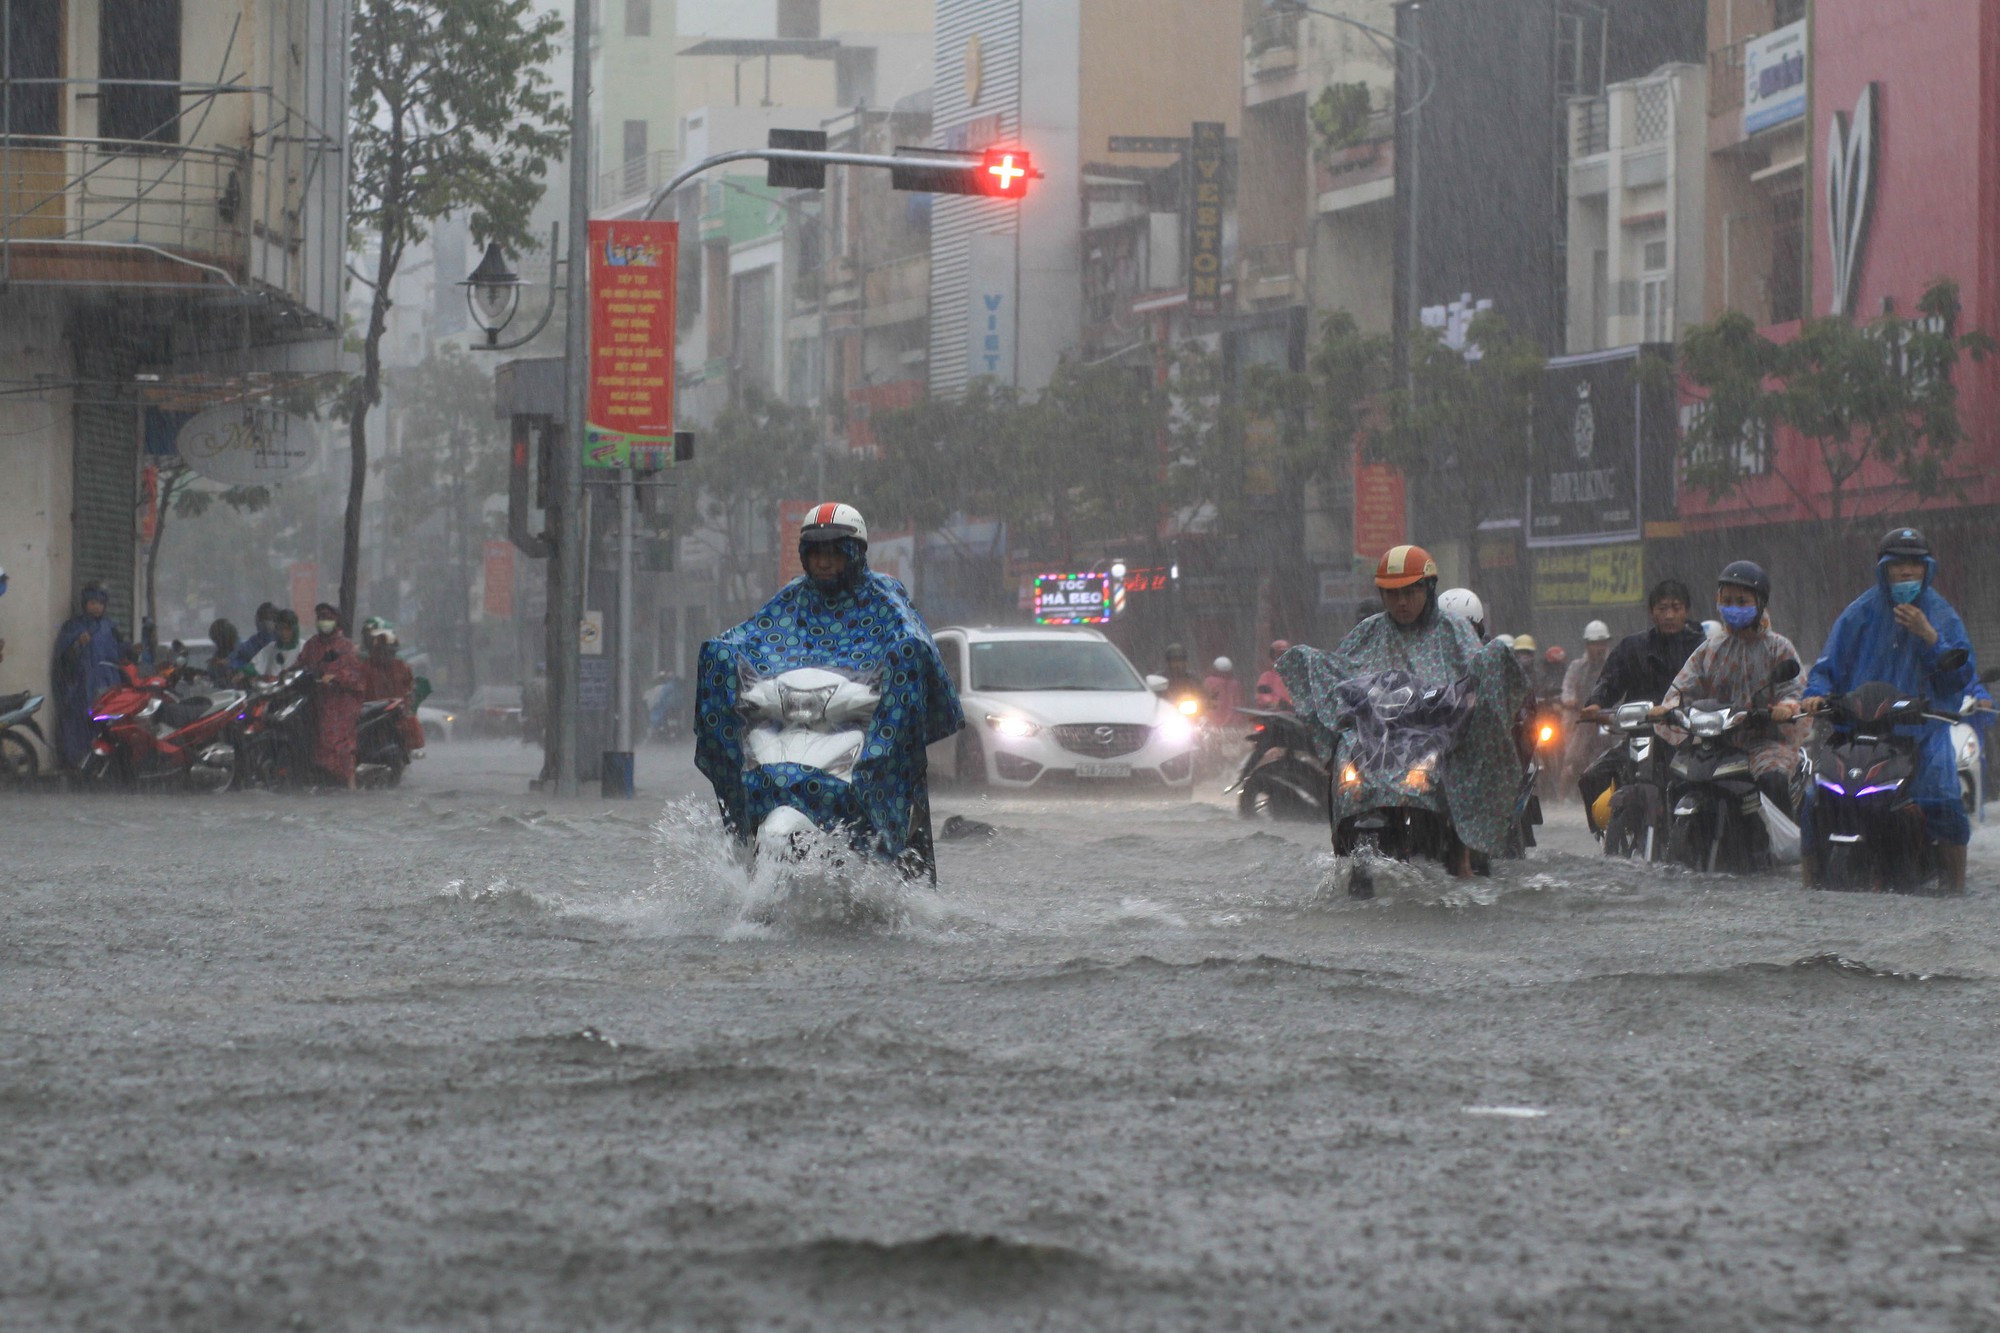 Unseasonal downpours to lash central Vietnam this week